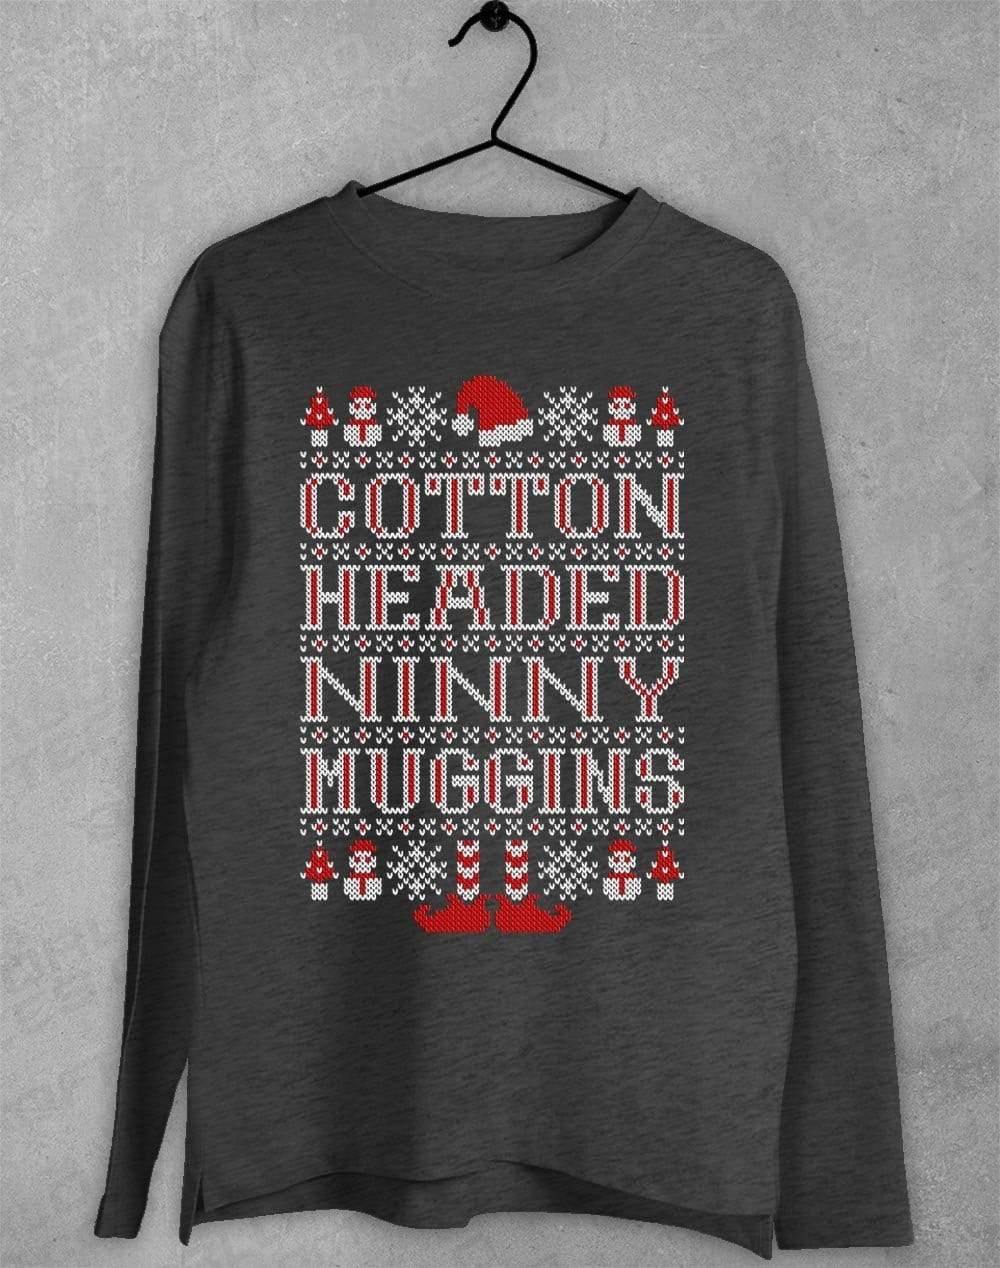 Cotton Headed Ninny Muggins Festive Knitted-Look Long Sleeve T-Shirt S / Dark Heather  - Off World Tees